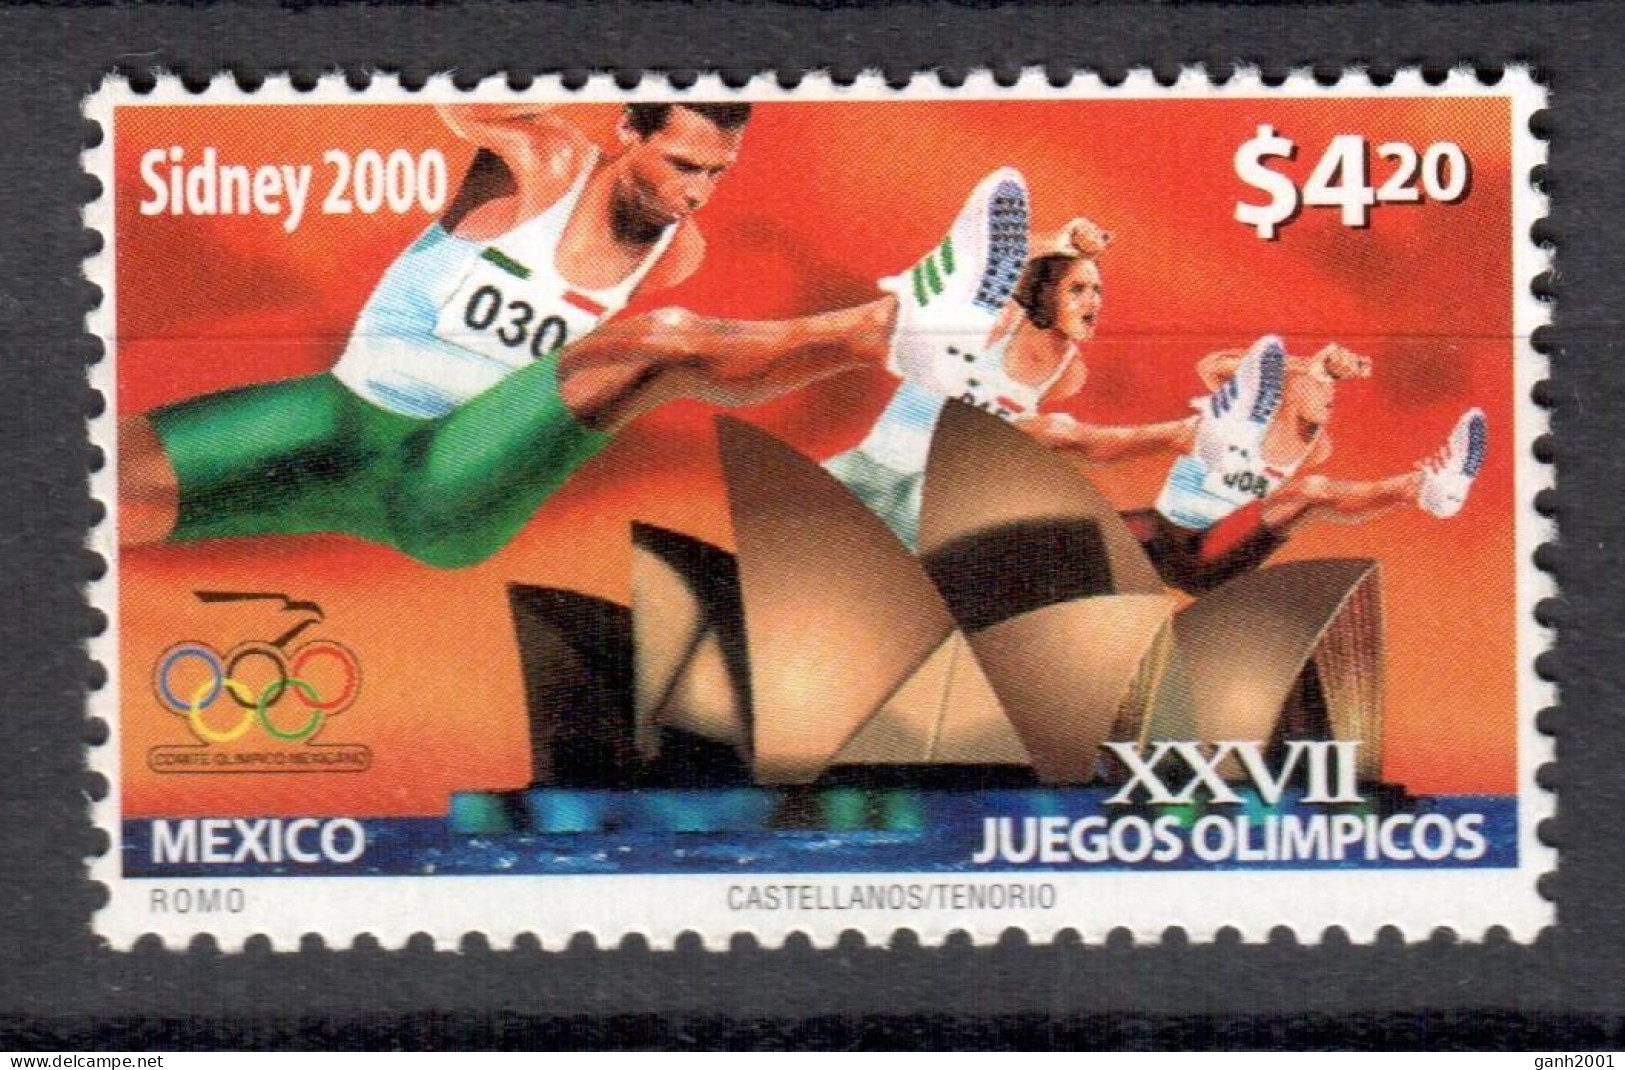 Mexico 2000 / Olympic Games Sydney 2000 MNH Juegos Olímpicos Sidney Olympische Spiele / Cu21322  18-16 - Verano 2000: Sydney